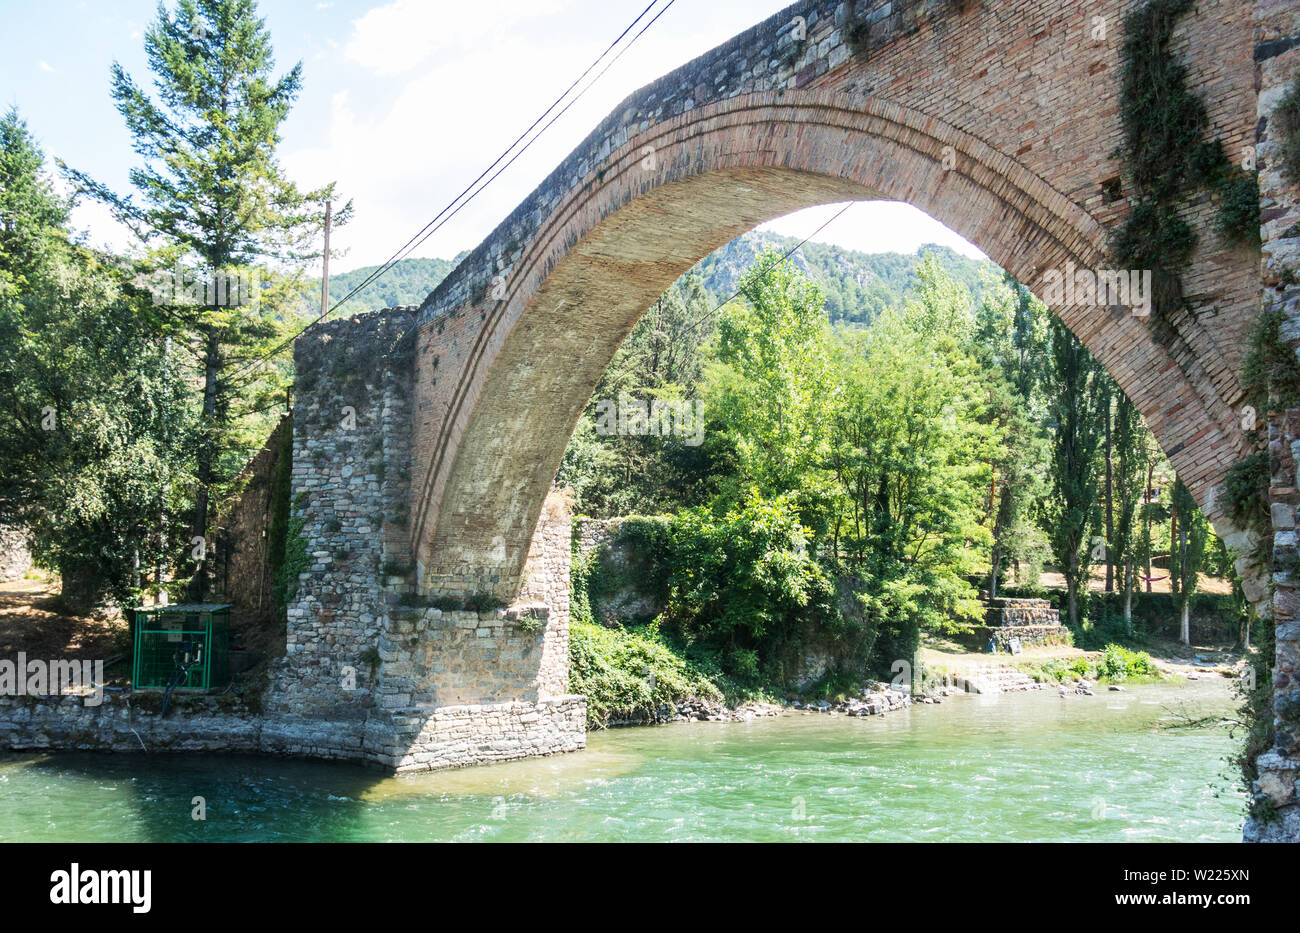 Romanesque bridge with a single arch, in Gerri de la Sal, on the Noguera Pallaresa river. Catalan Pyrenees. Catalonia, Spain. Stock Photo